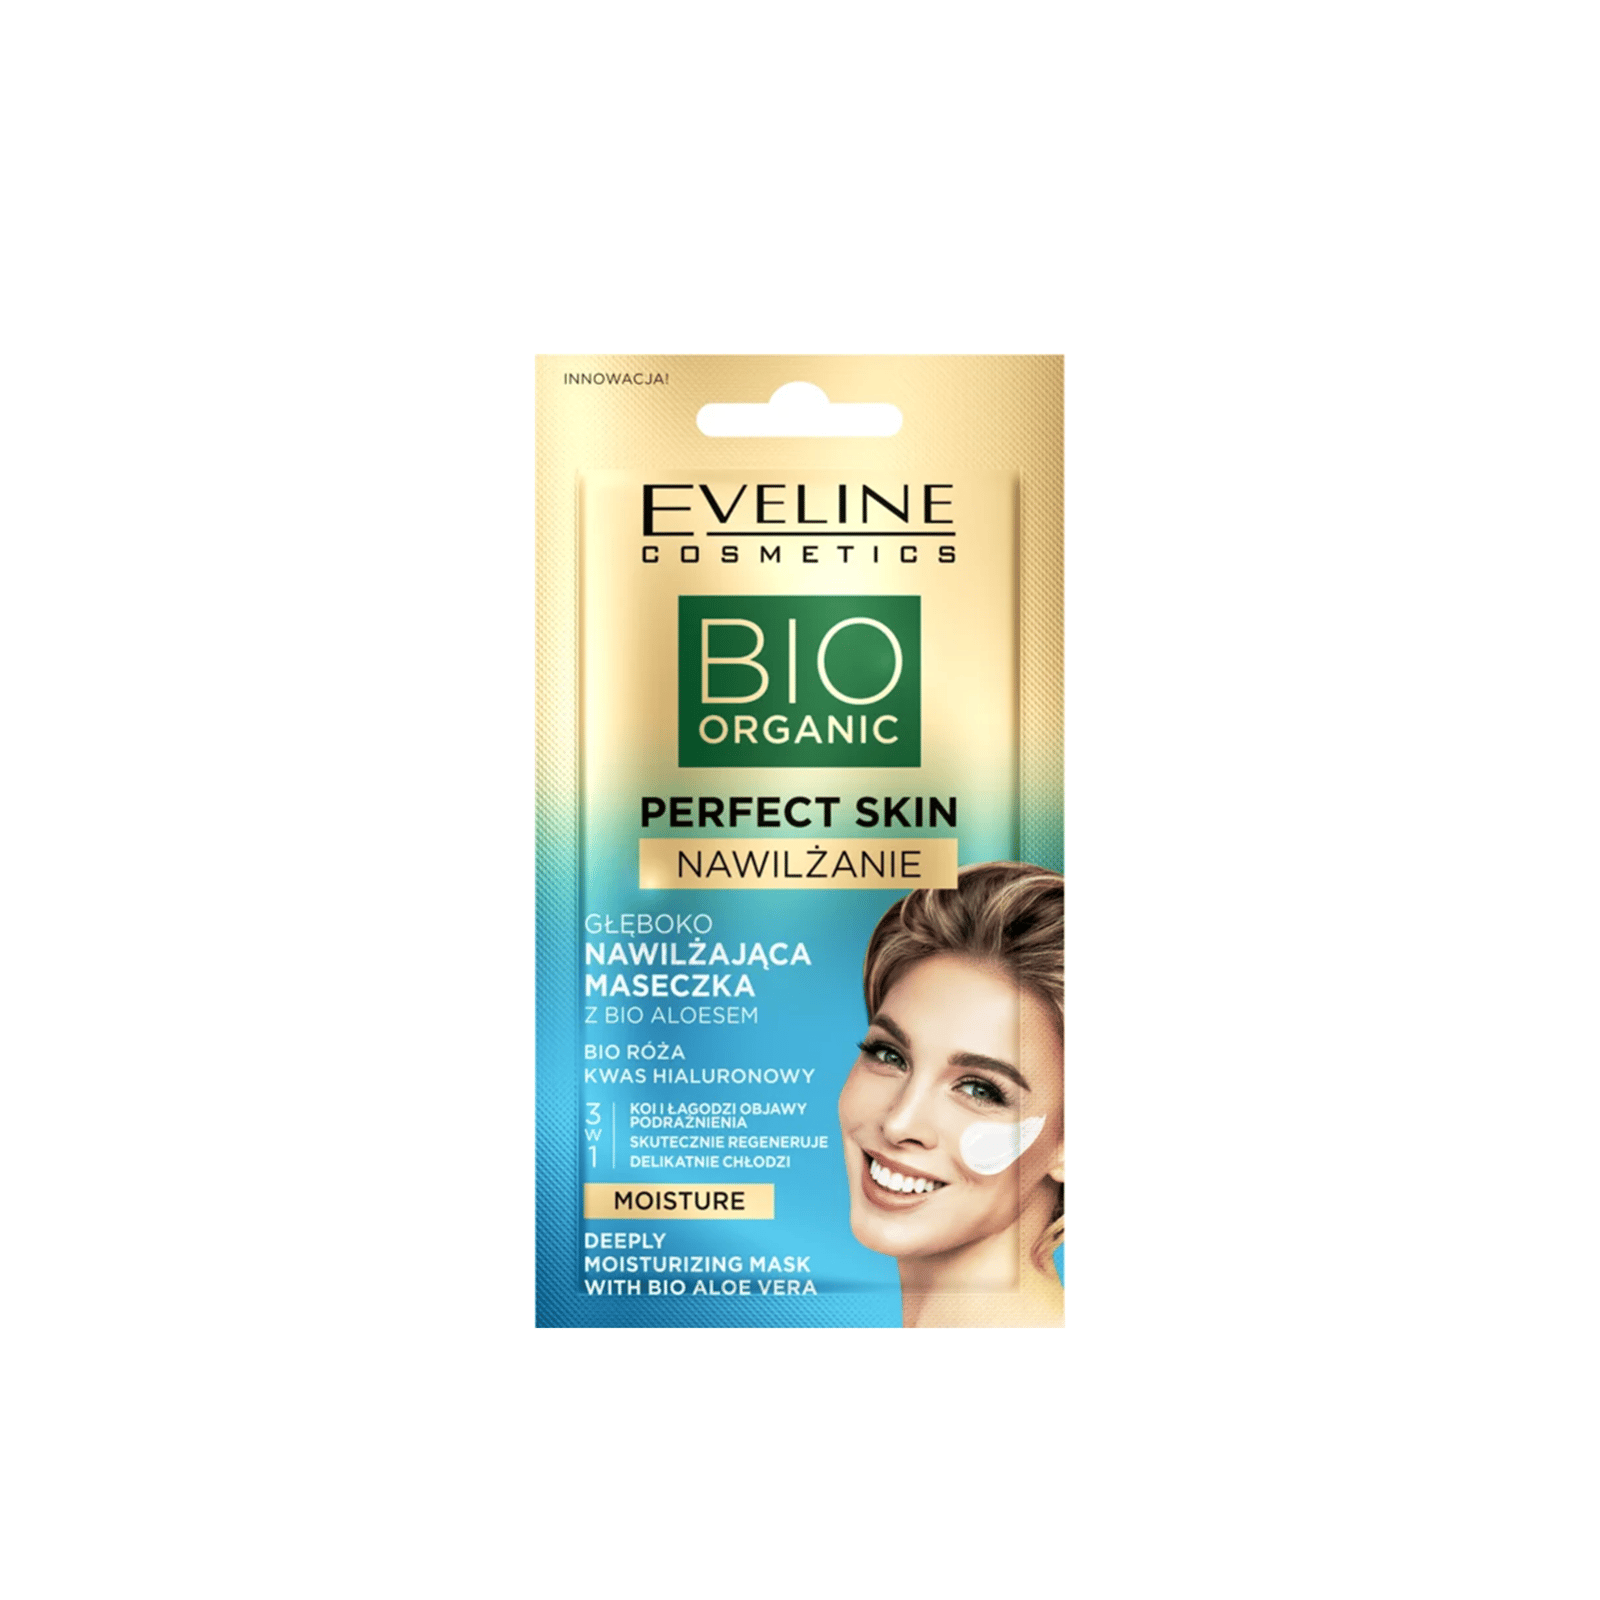 Eveline Cosmetics Bio Organic Perfect Skin Moisture Deeply Moisturizing Mask 8ml